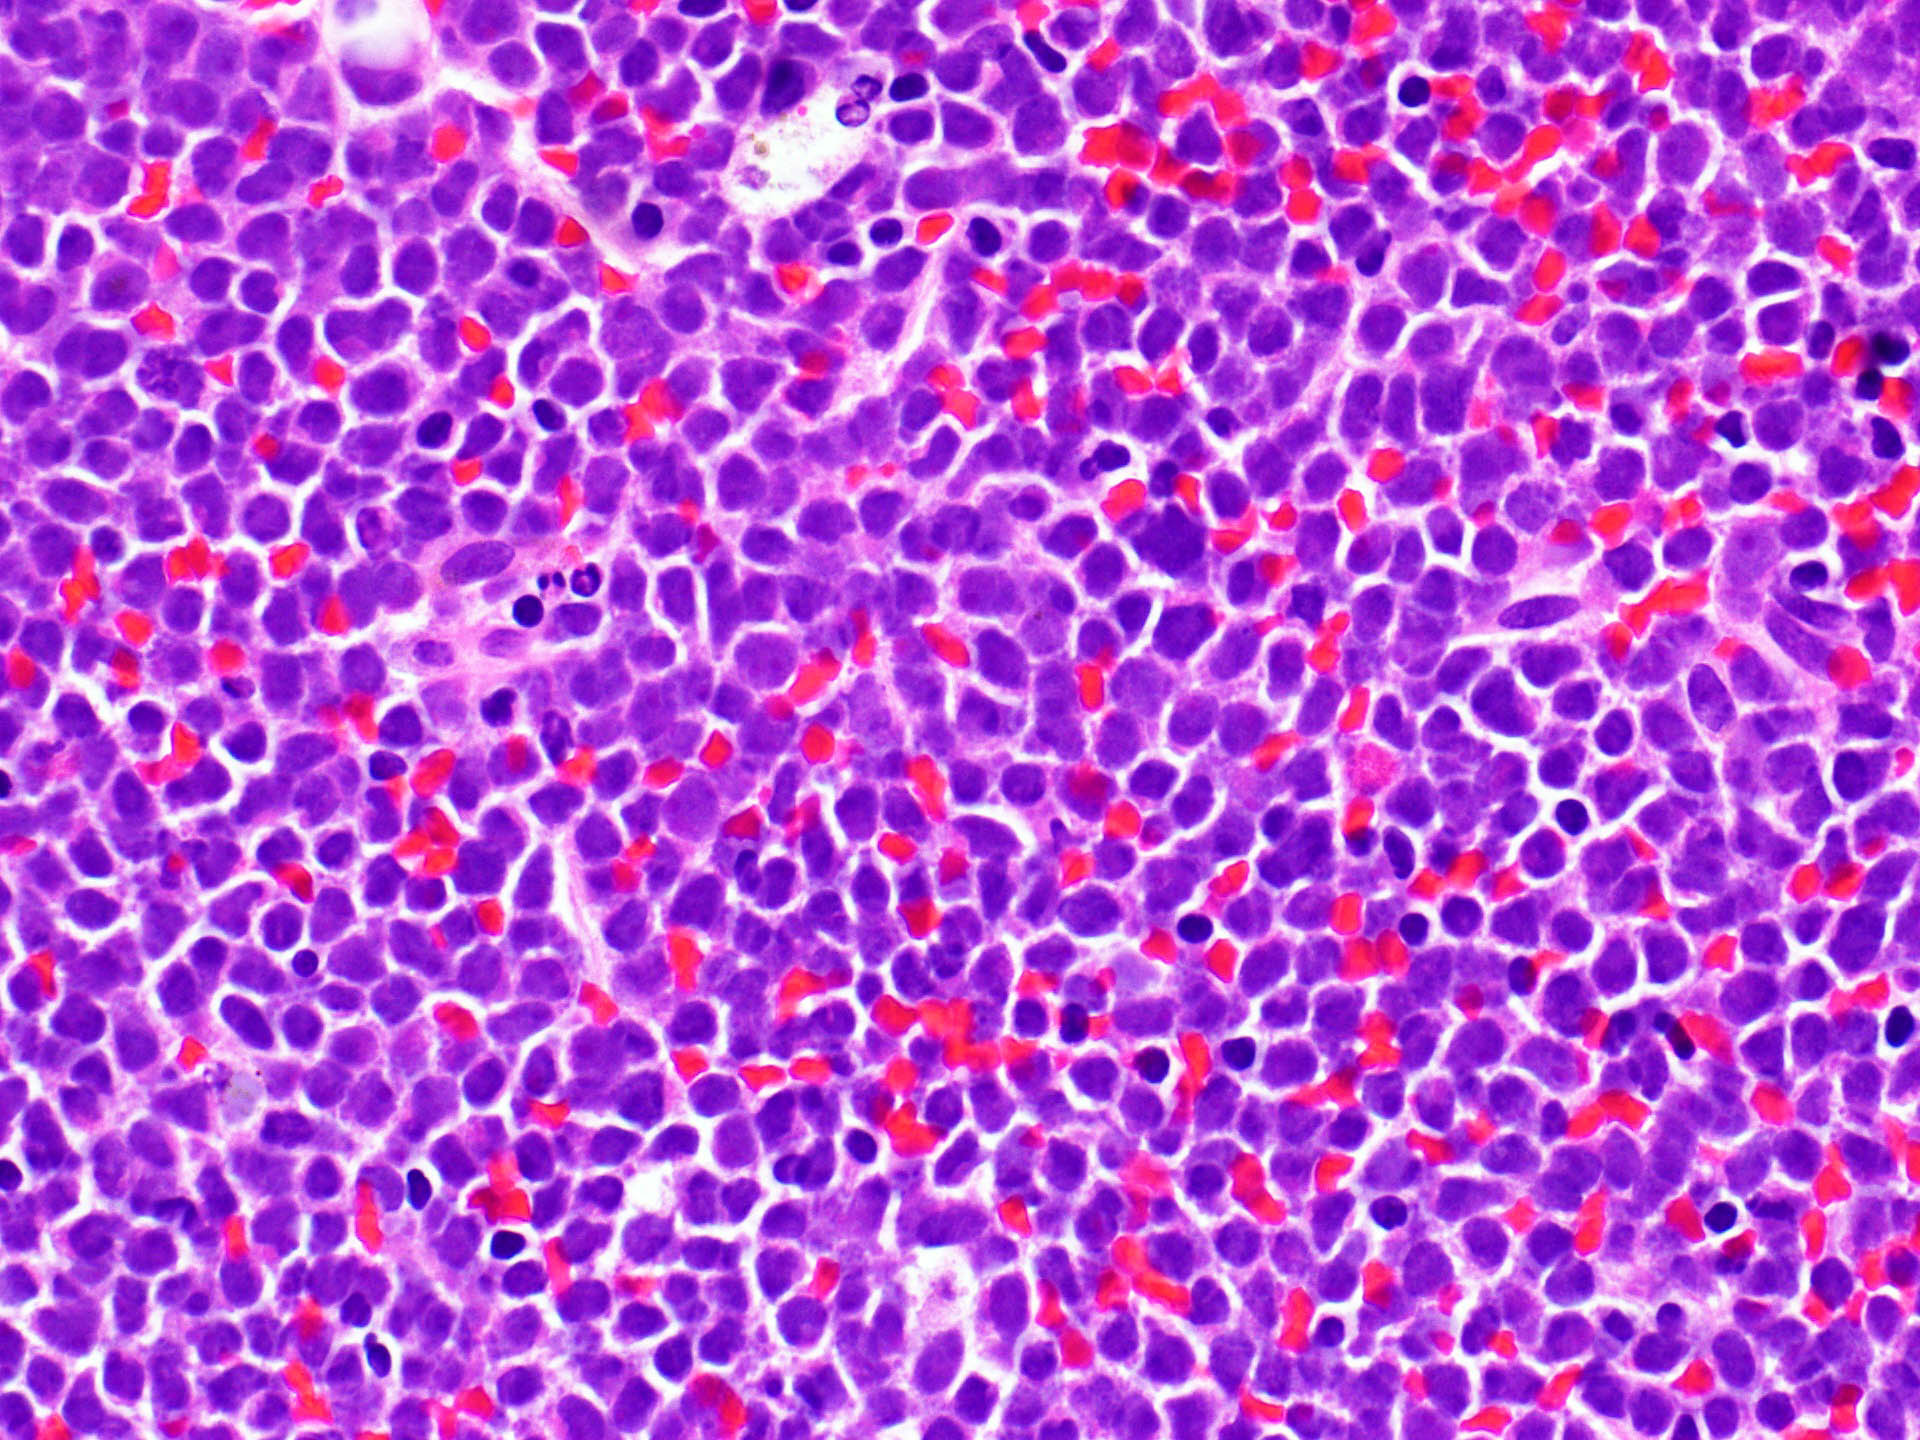 B lymphoblastic leukemia / lymphoma